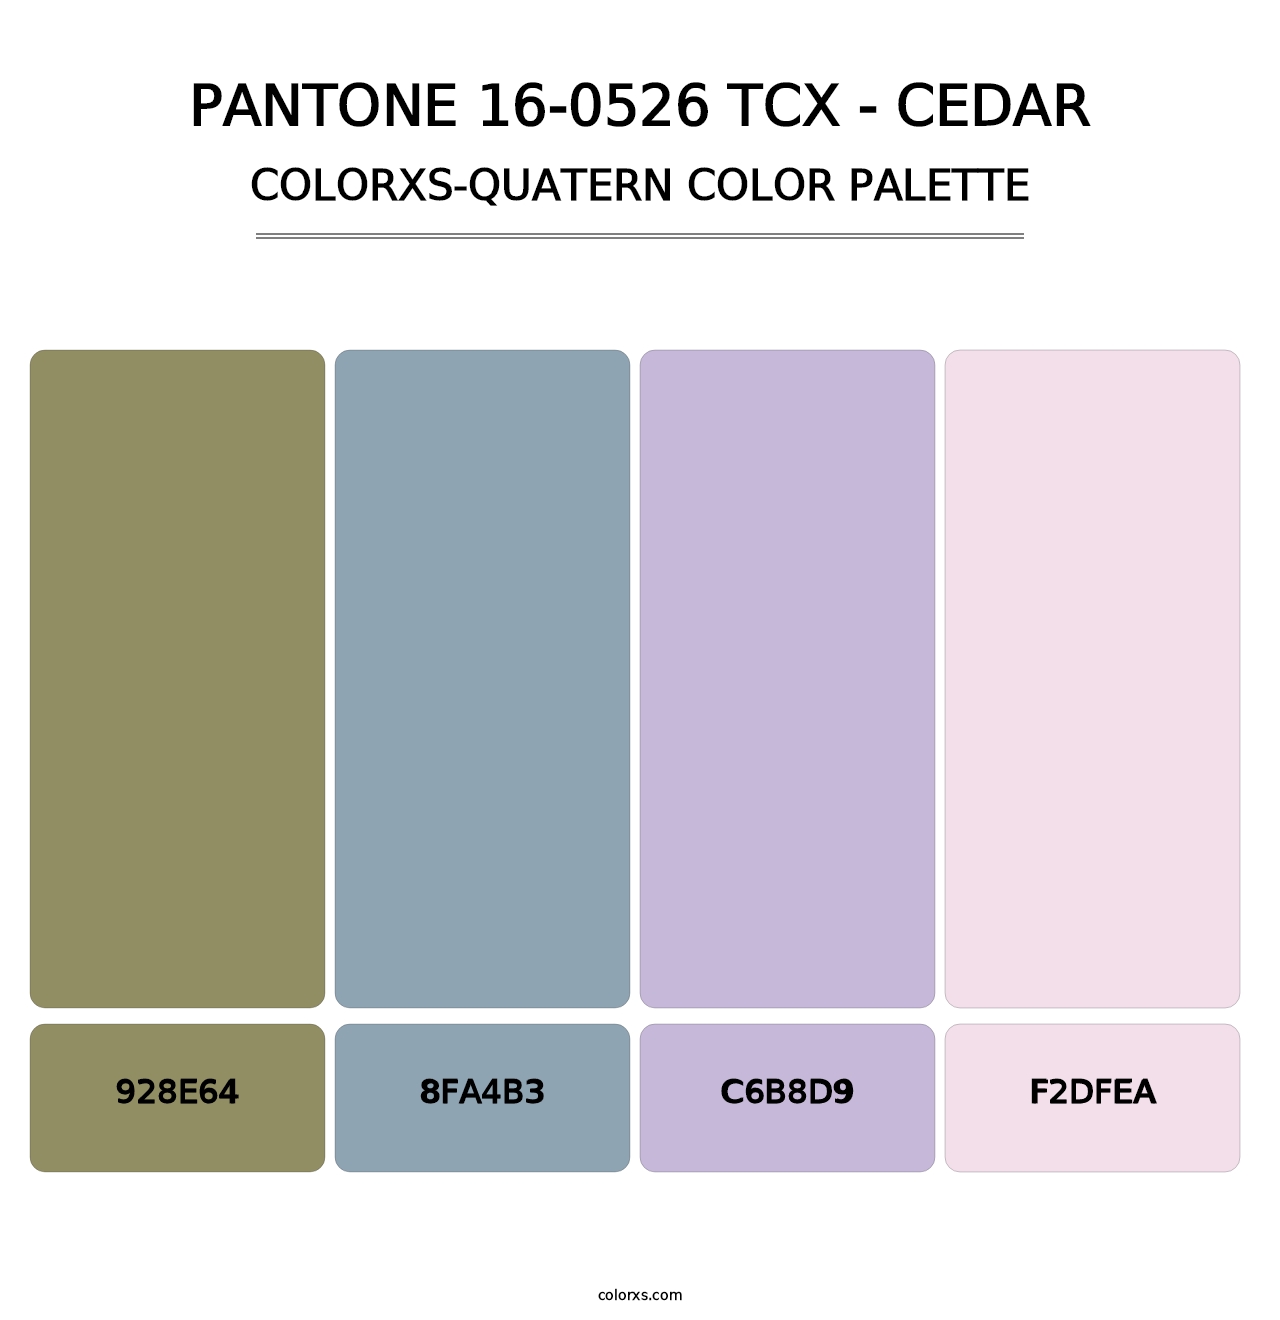 PANTONE 16-0526 TCX - Cedar - Colorxs Quatern Palette